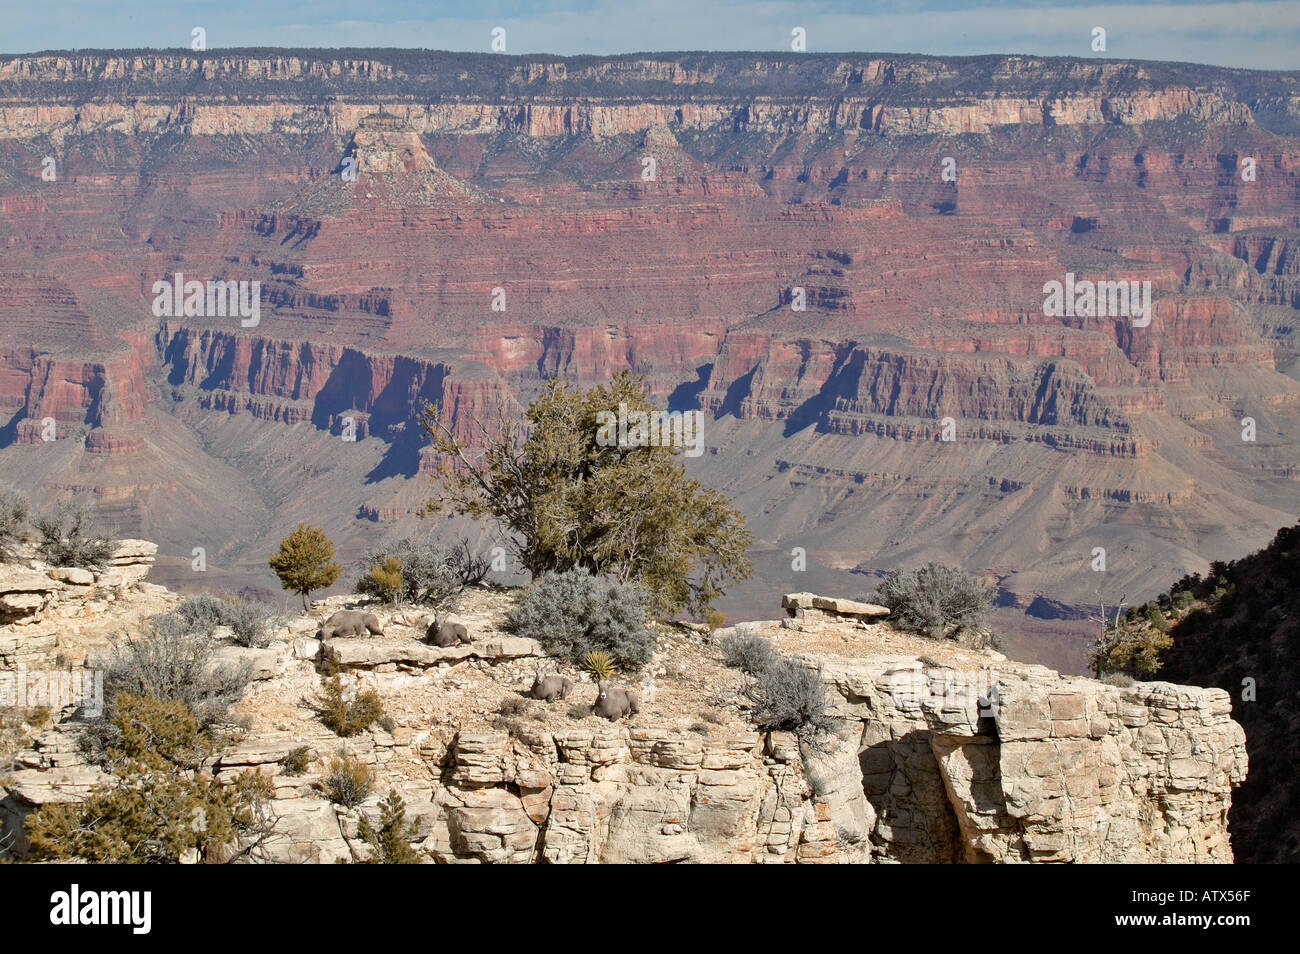 Big Horn Sheep family ewe and lambs on rock cliff ledge overlooking the Grand Canyon Arizona Stock Photo